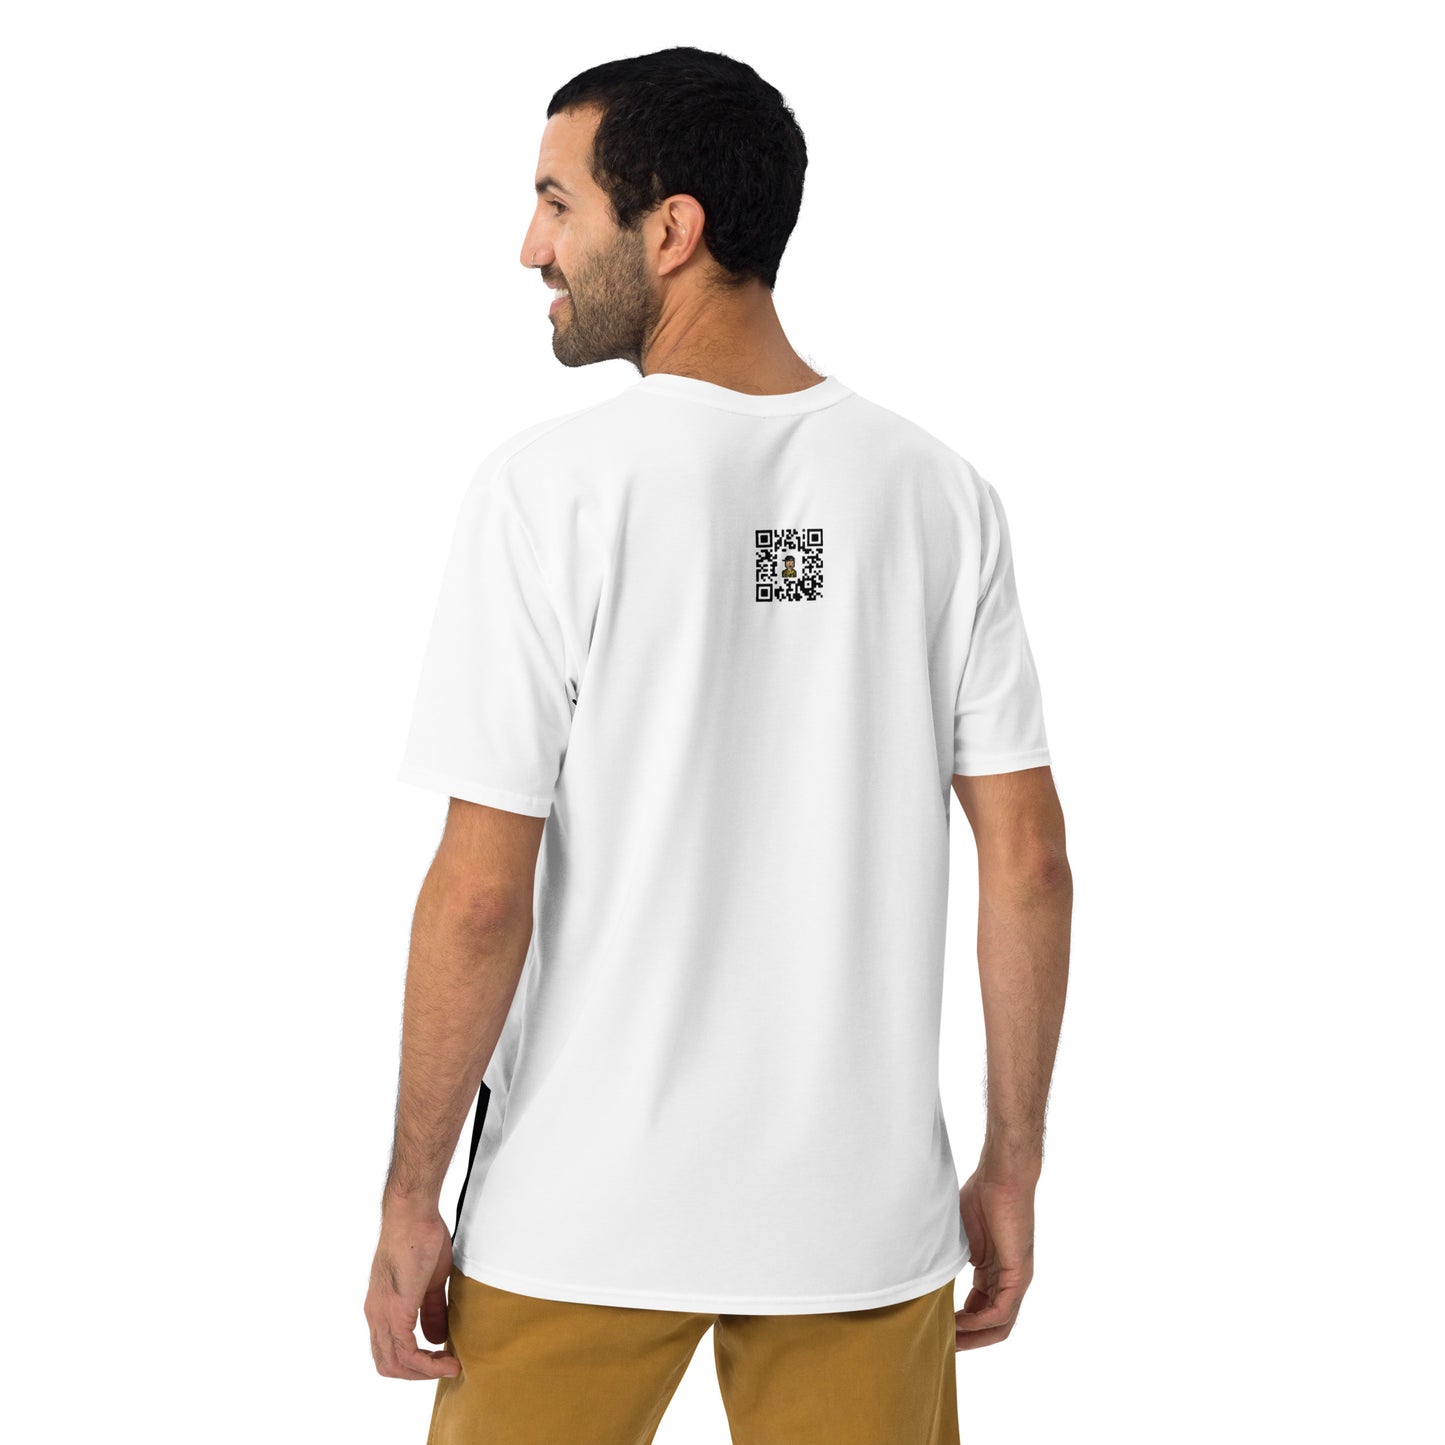 All-Over t-shirt feat. Nakamigos #12679 (rear QrCode NFT URL)